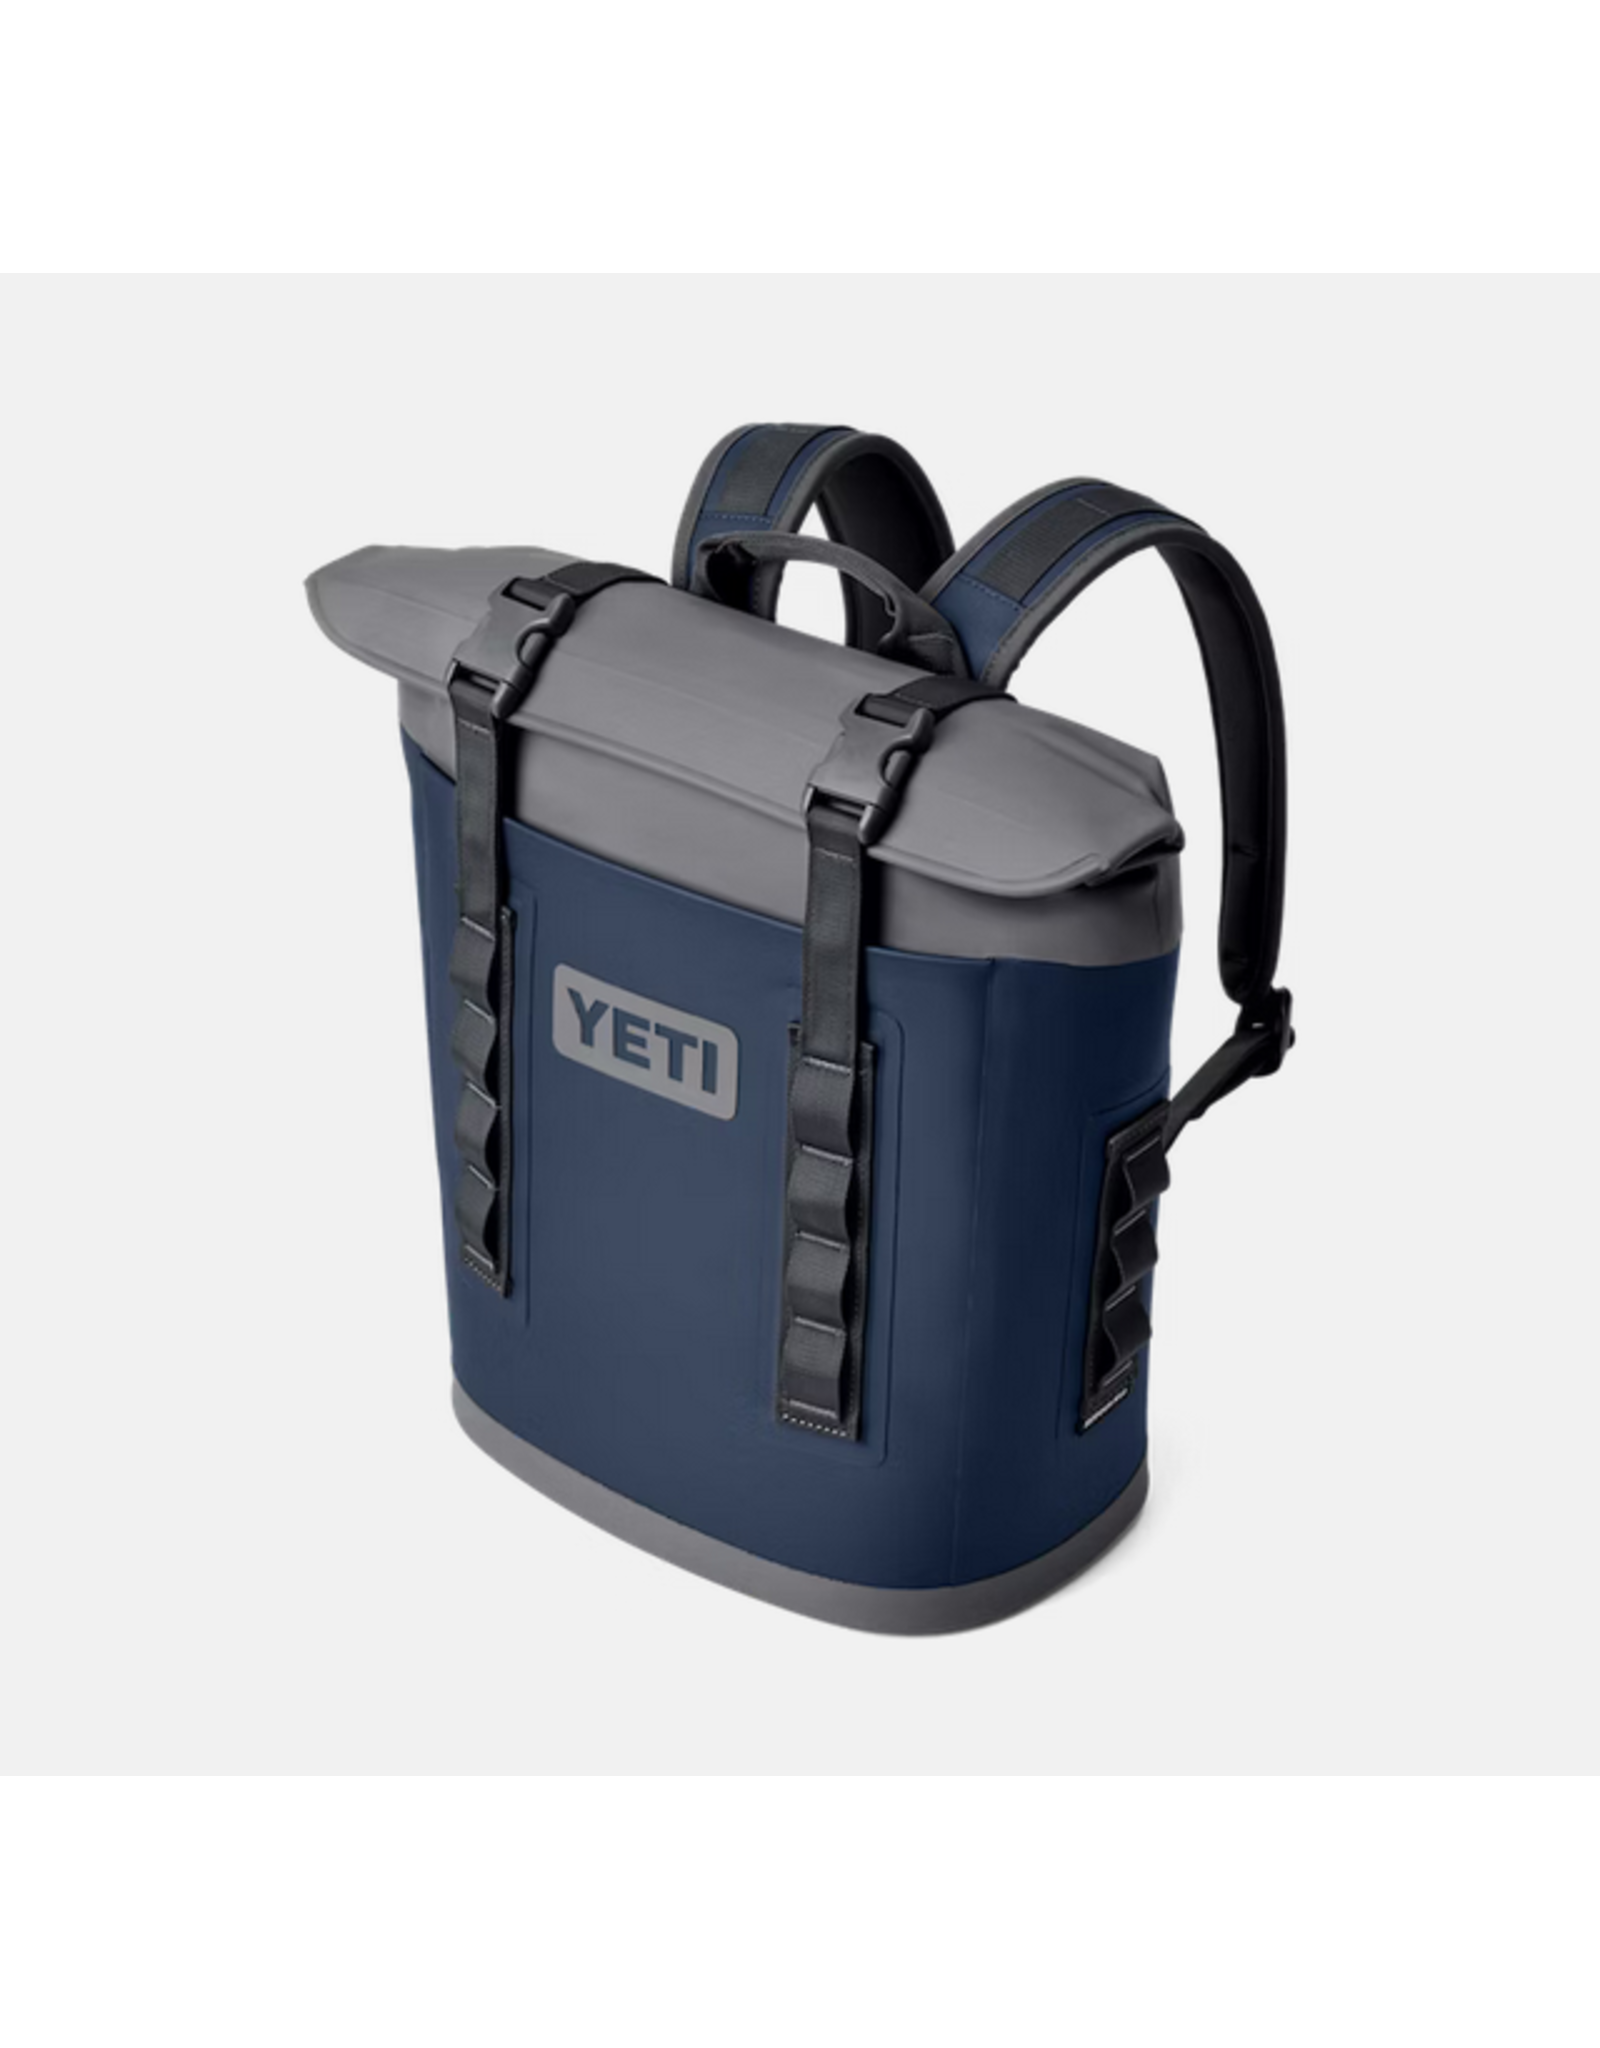 Yeti Yeti Hopper M12 Backpack Soft Cooler